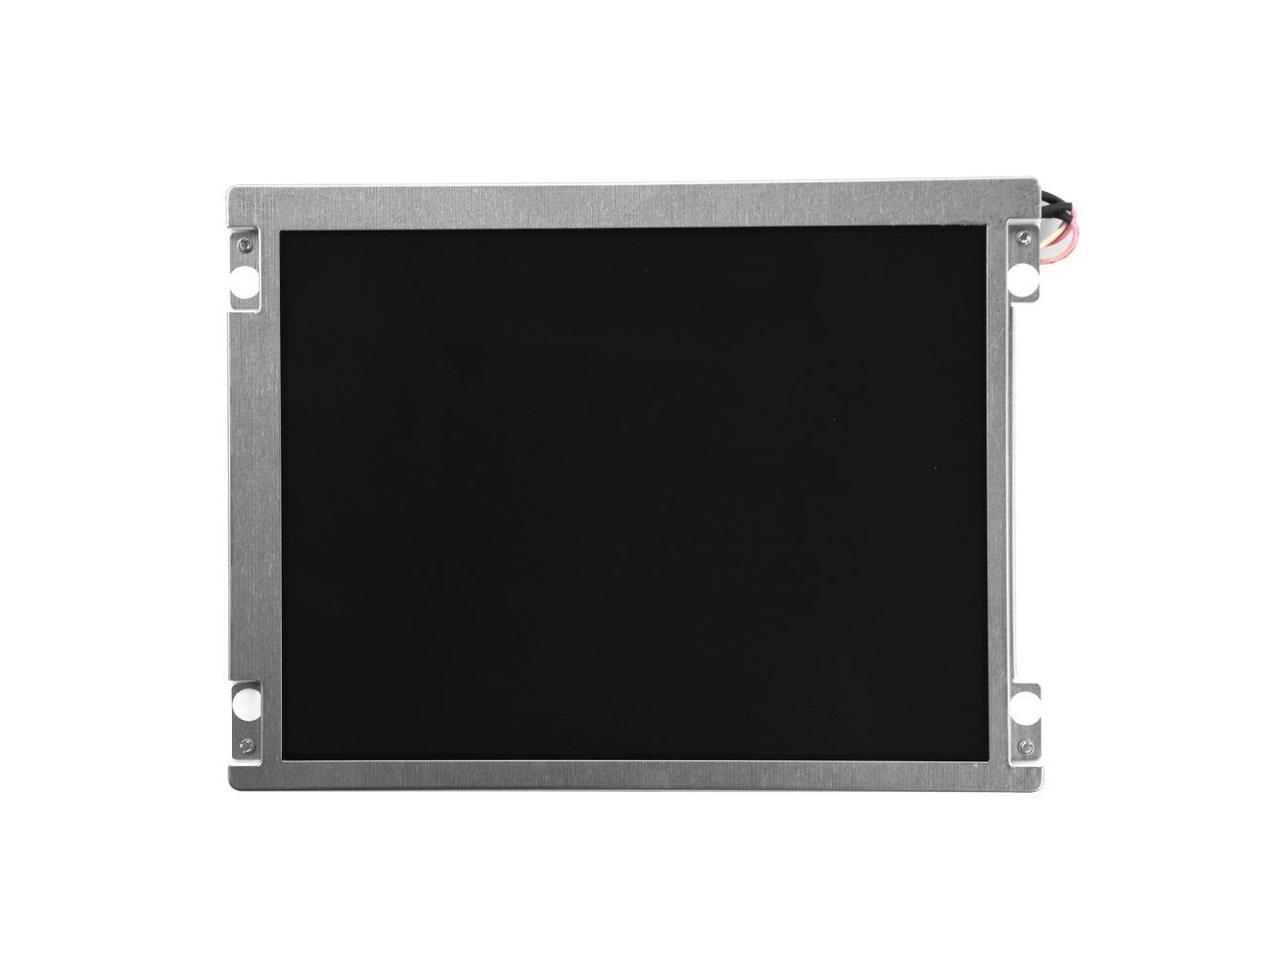 Display LTM08C351S LTPS TFT-LCD Panel 8.4" 800*600 for Toshiba 